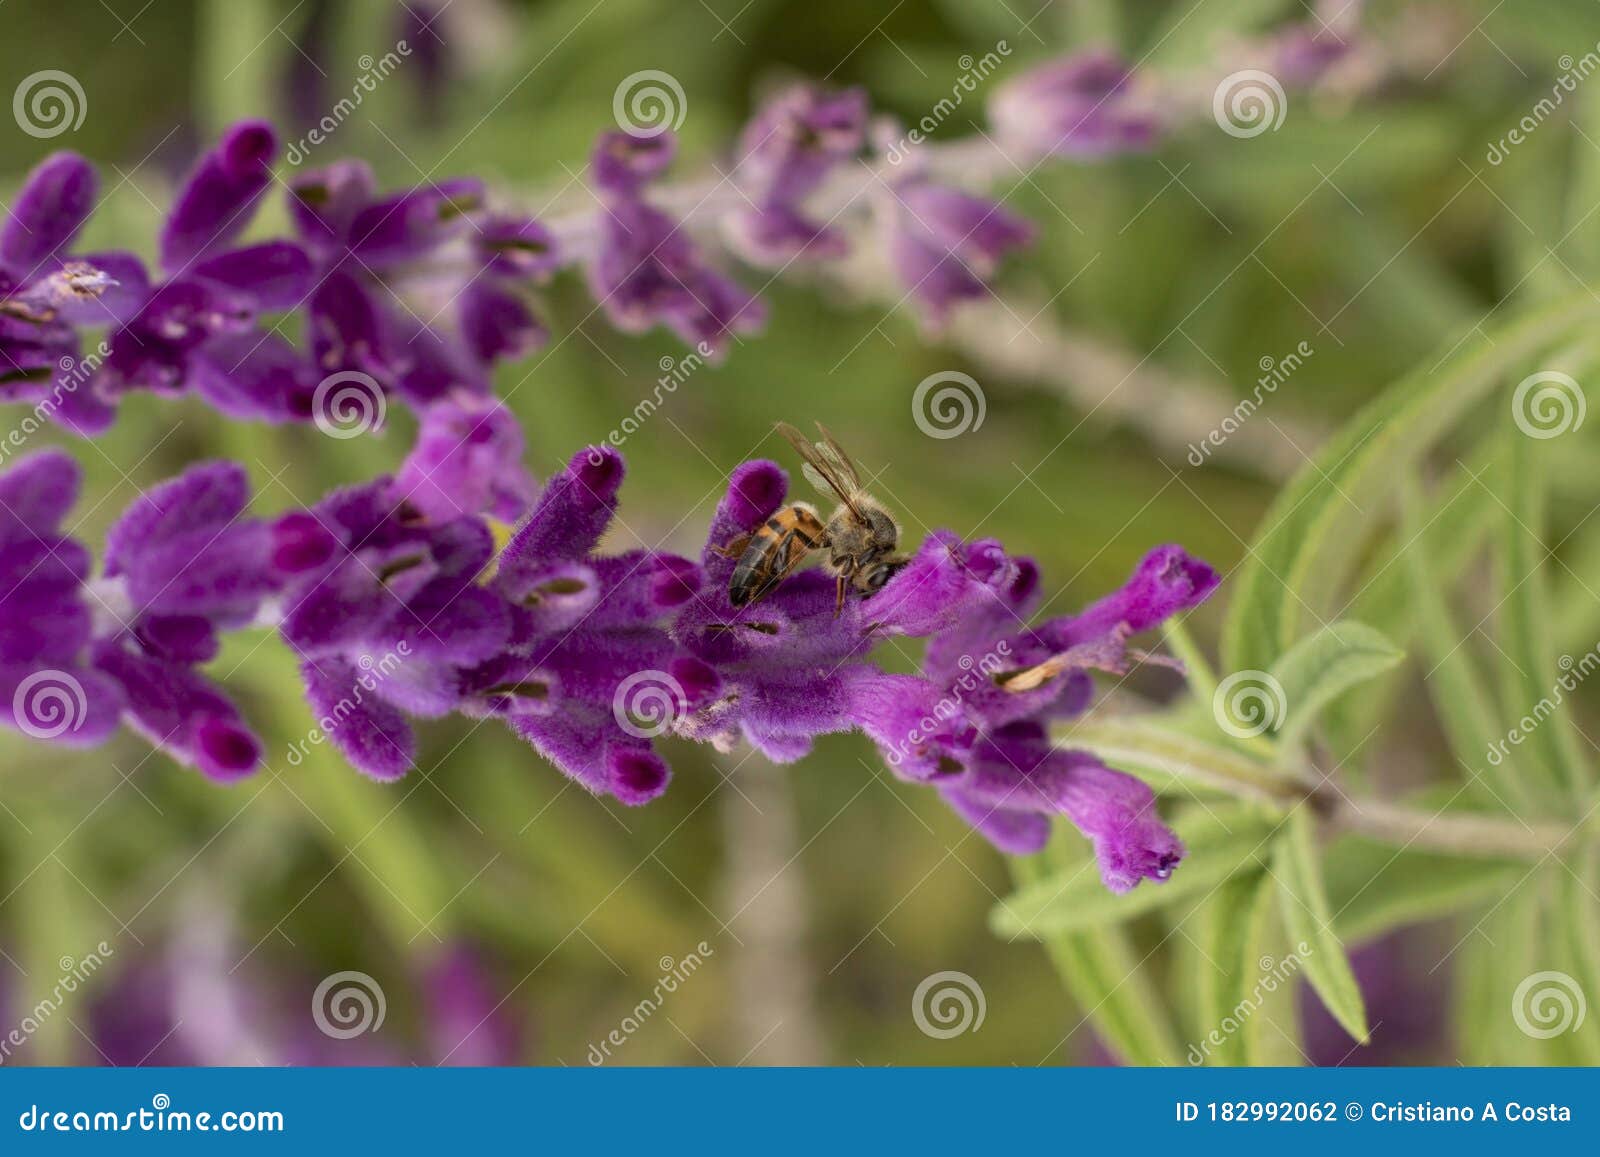 bee on lavender flower